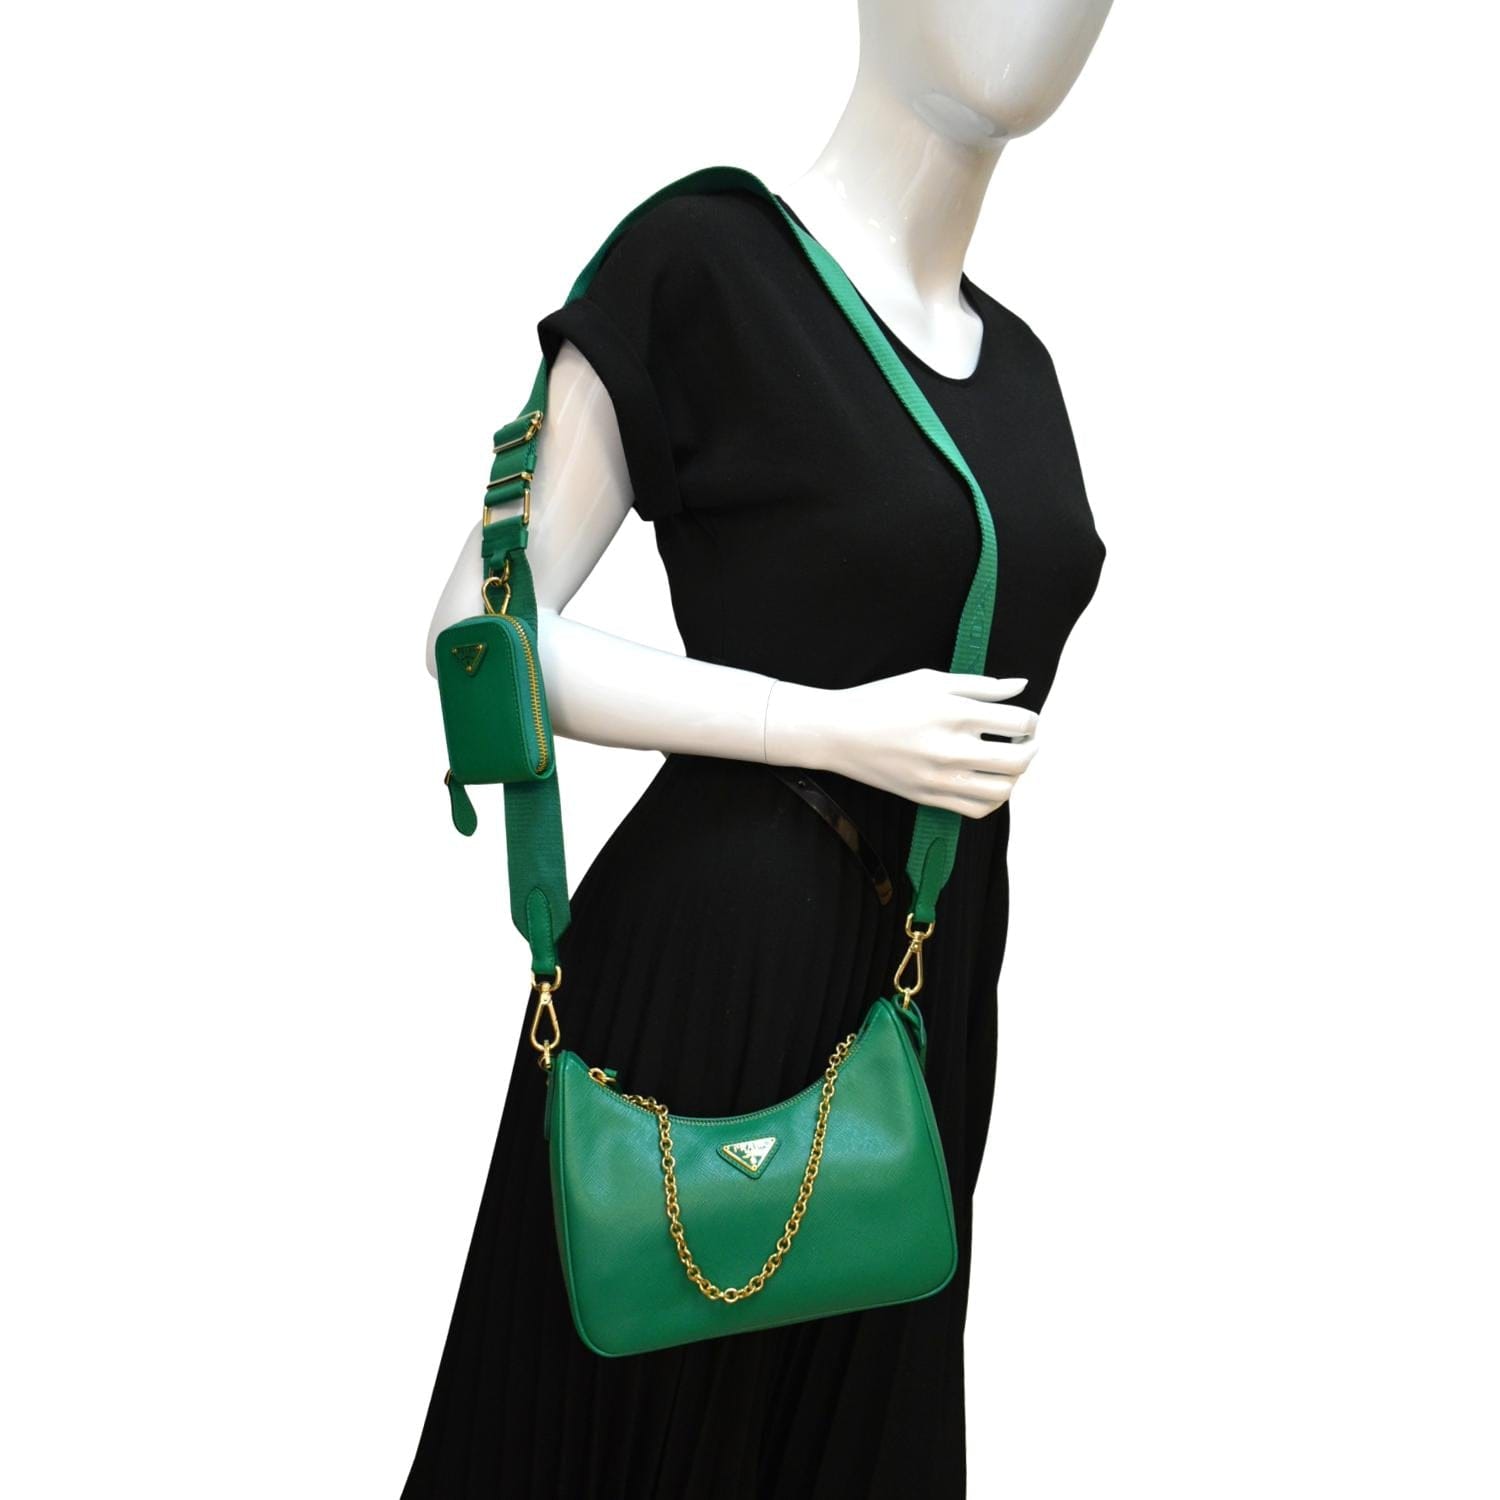 Prada Green Saffiano Lux Leather Re-Edition 2005 Shoulder Bag Prada